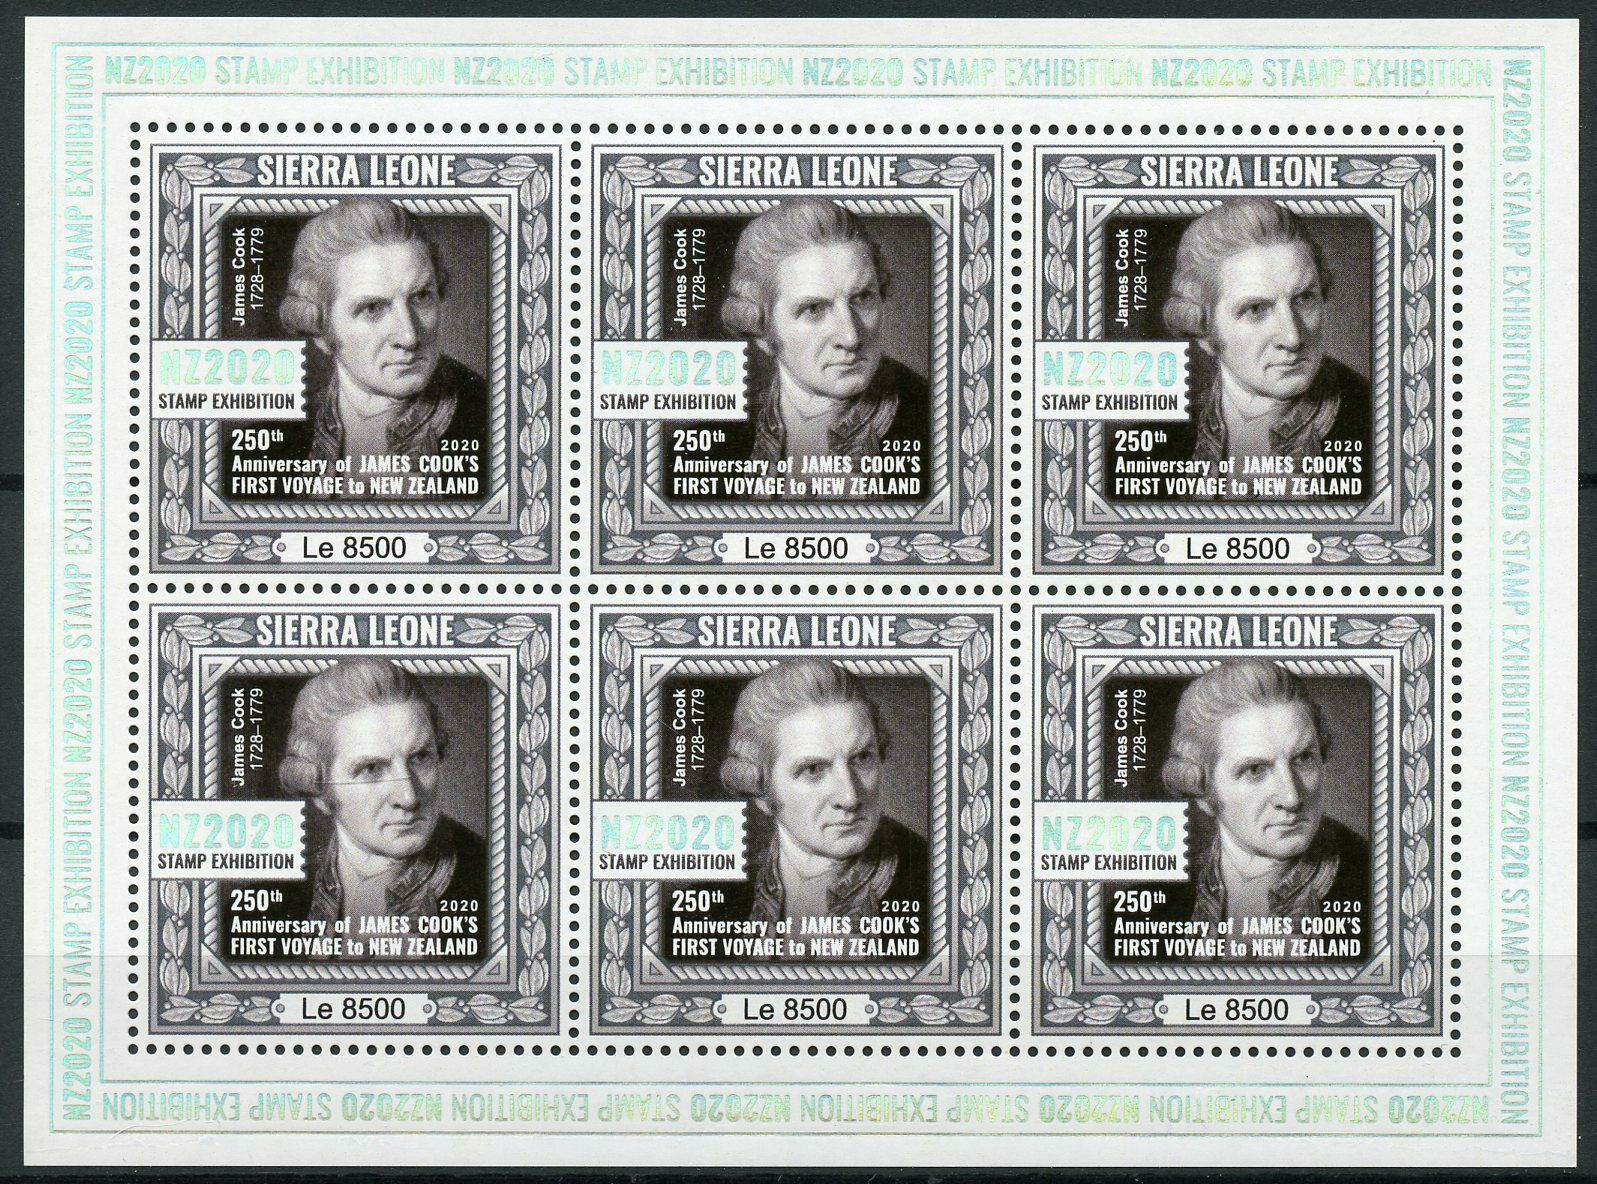 Sierra Leone 2020 MNH Captain James Cook Stamps People Exploration NZ2020 6v M/S